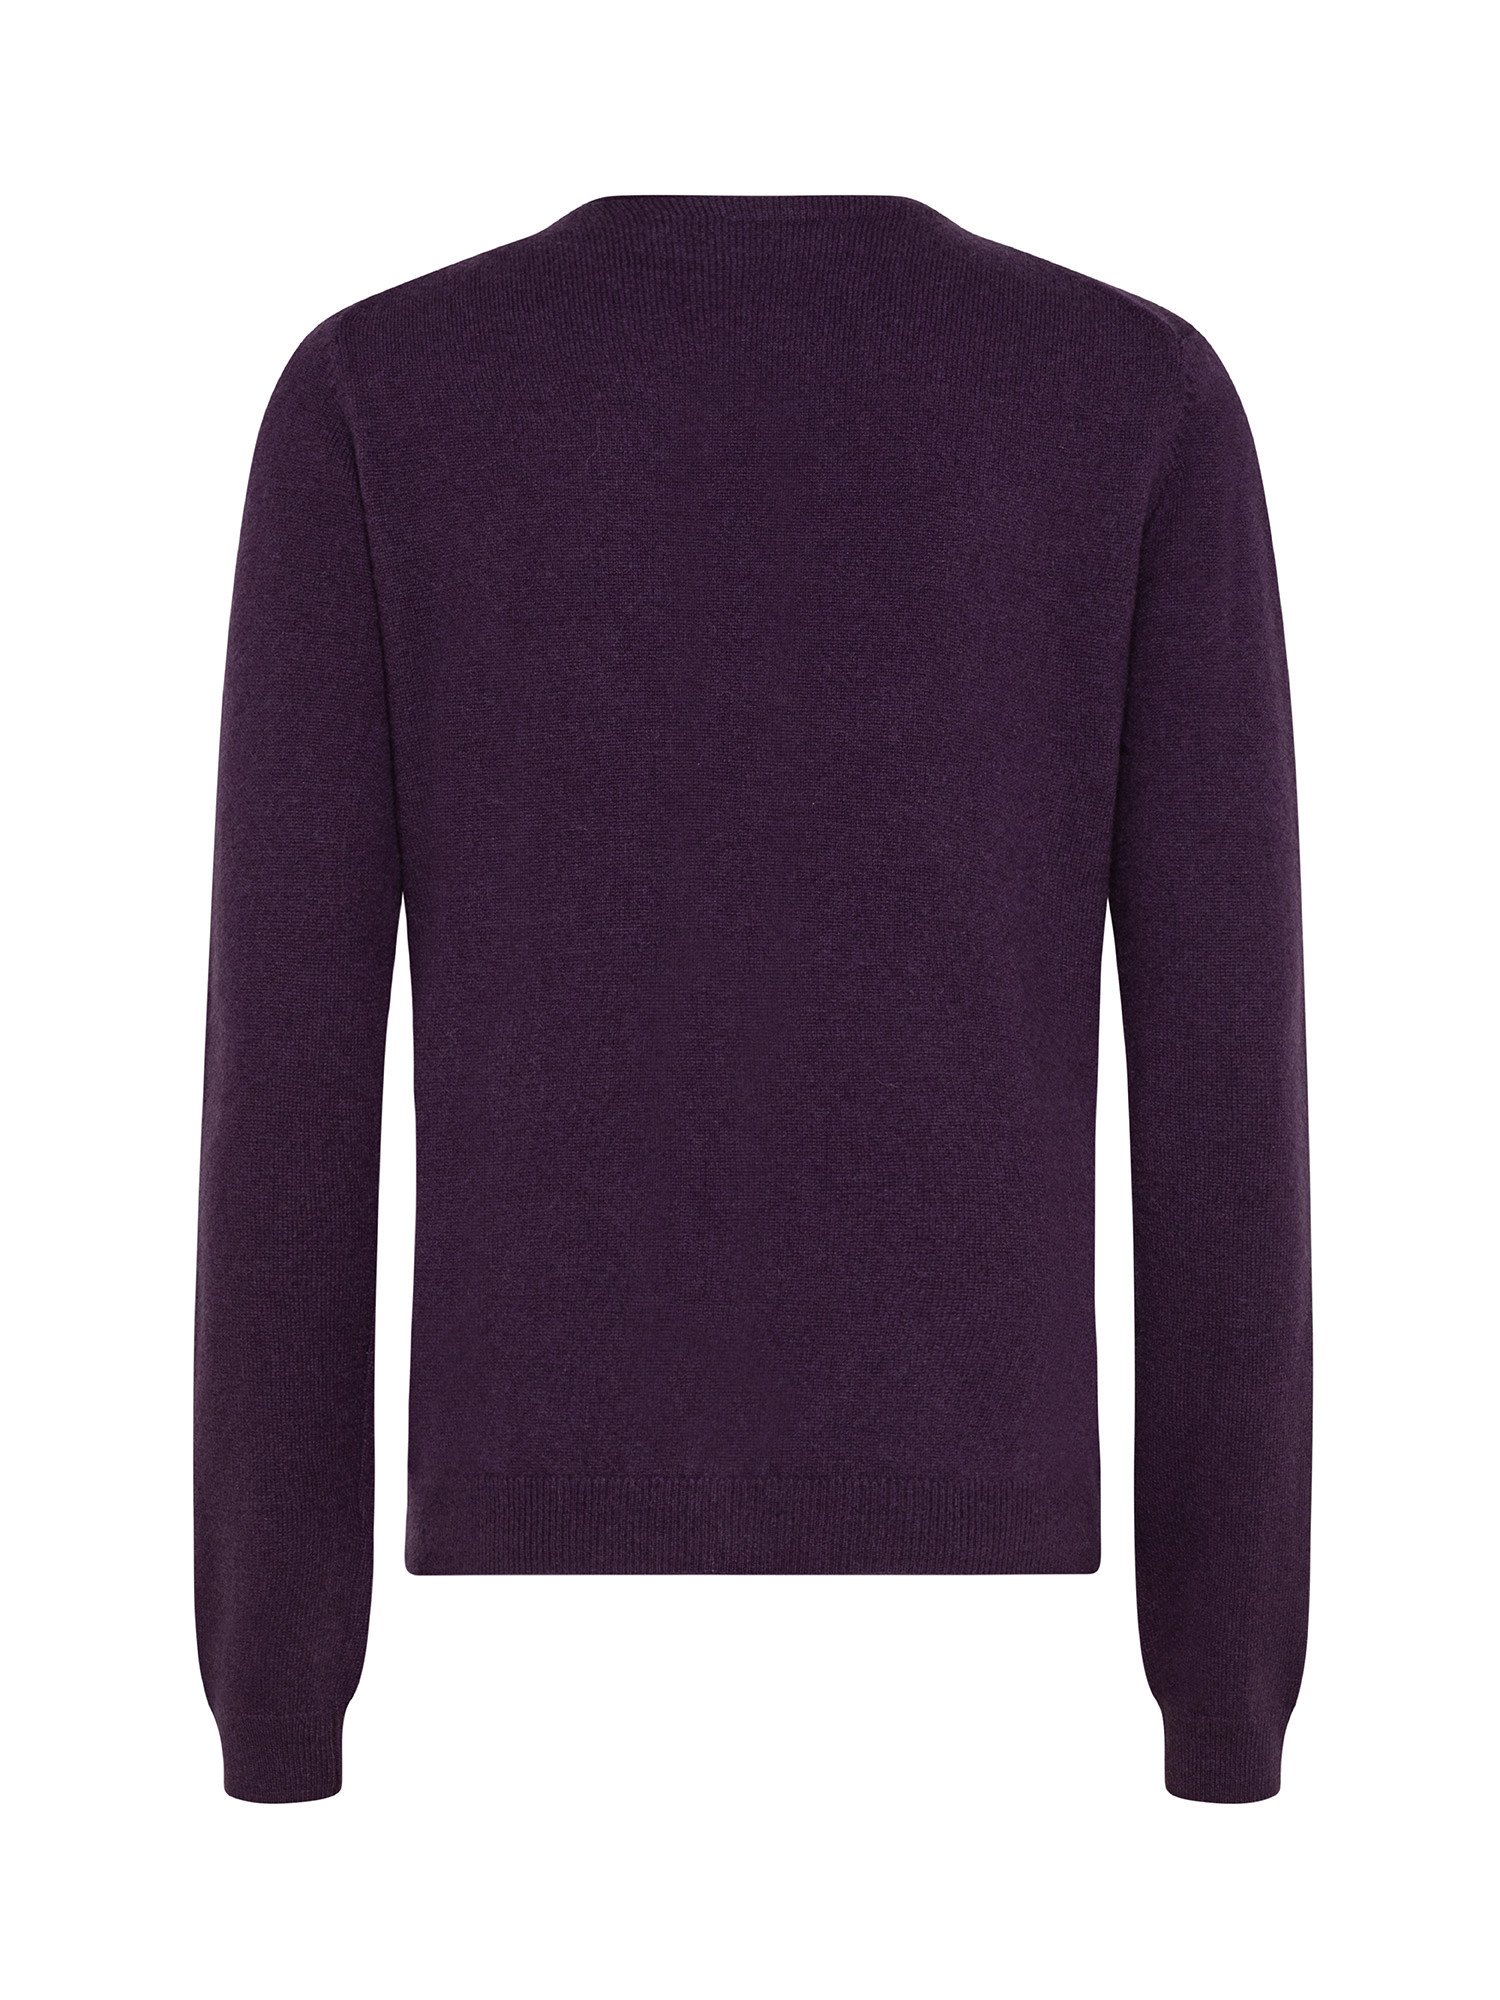 Koan - Pure cashmere crewneck cardigan, Purple, large image number 1